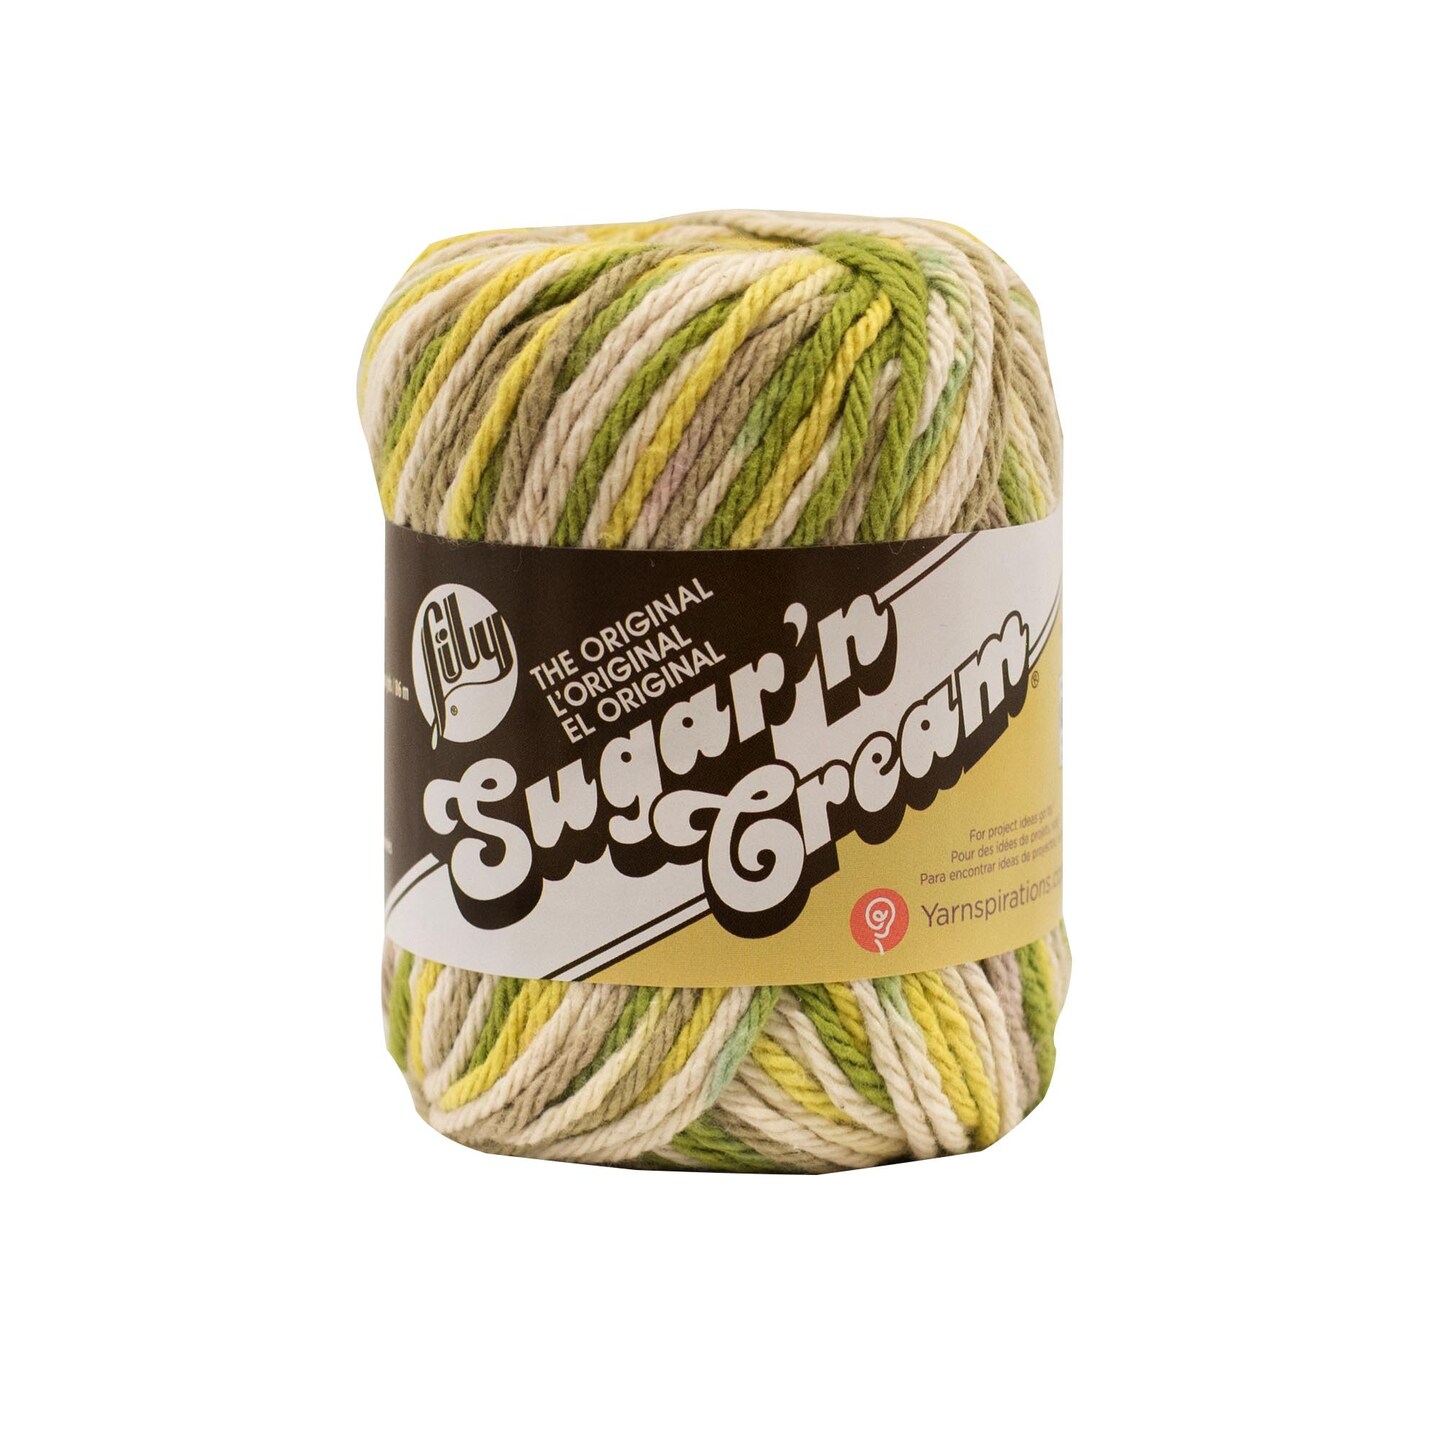 Lily Sugar'N Cream Guacamole Yarn - 6 Pack of 57g/2oz - Cotton - 4 Medium  (Worsted) - 95 Yards - Knitting/Crochet